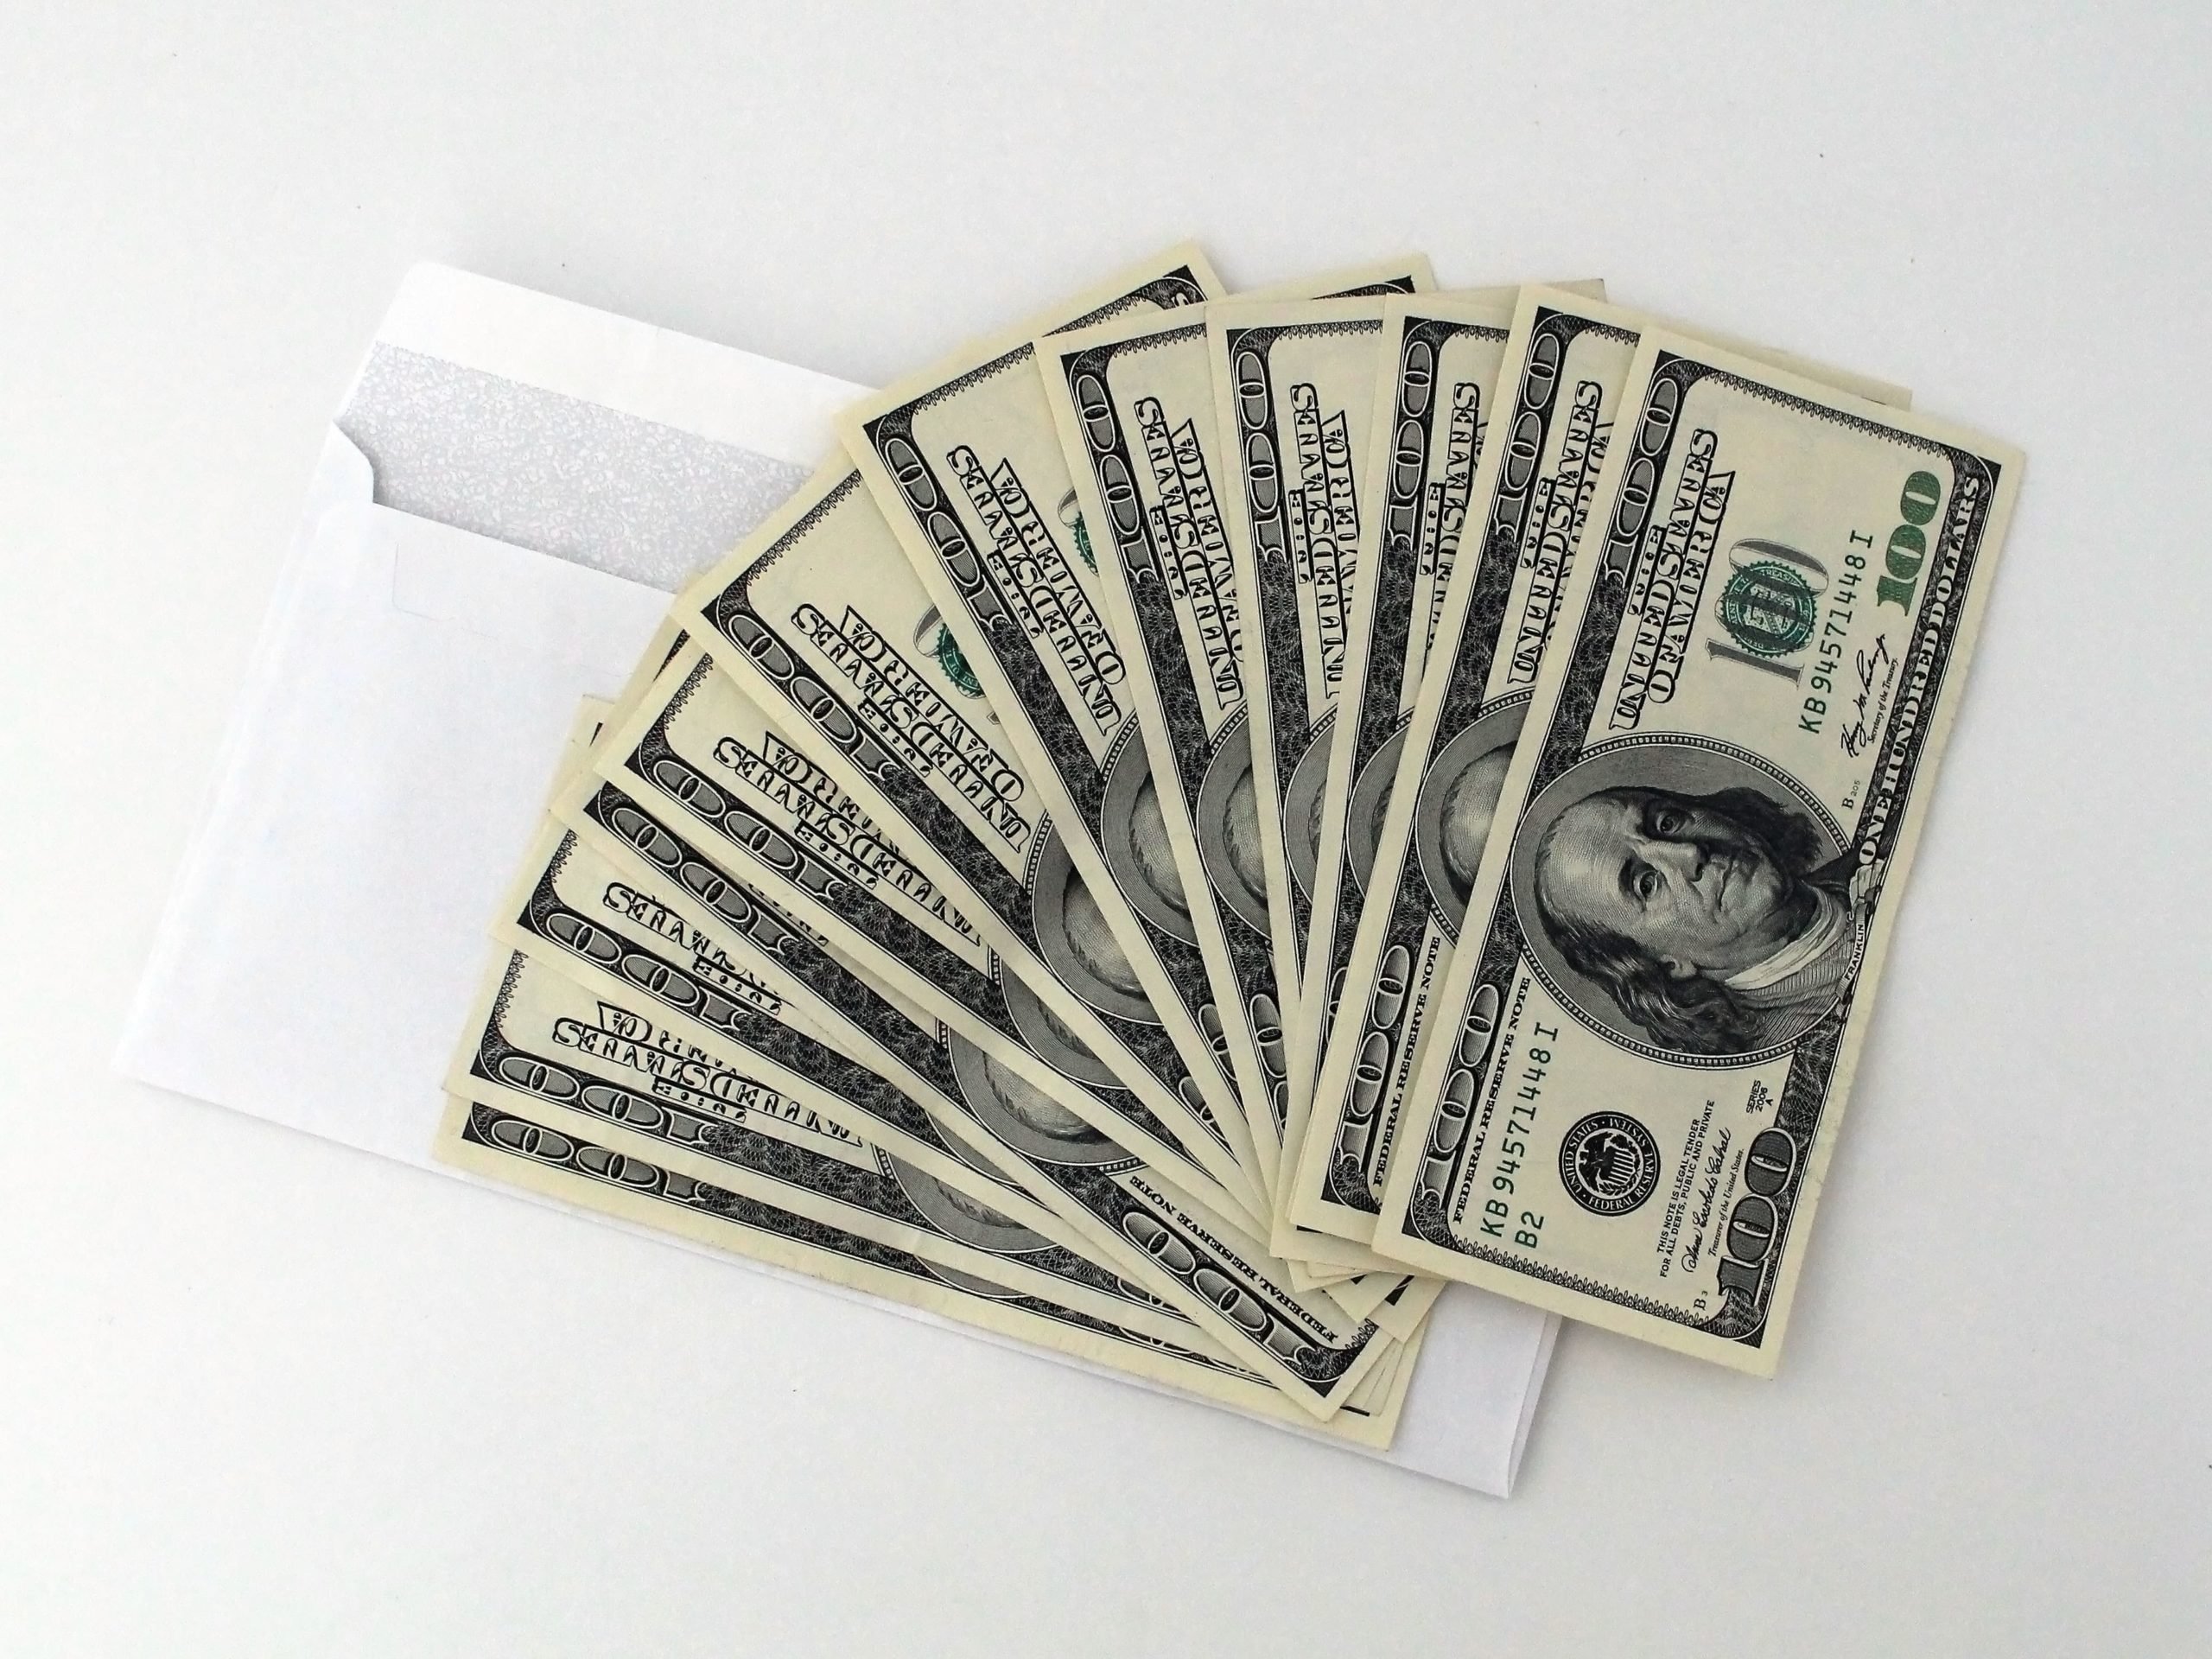 agree, 21 ways to earn money online for wordpress